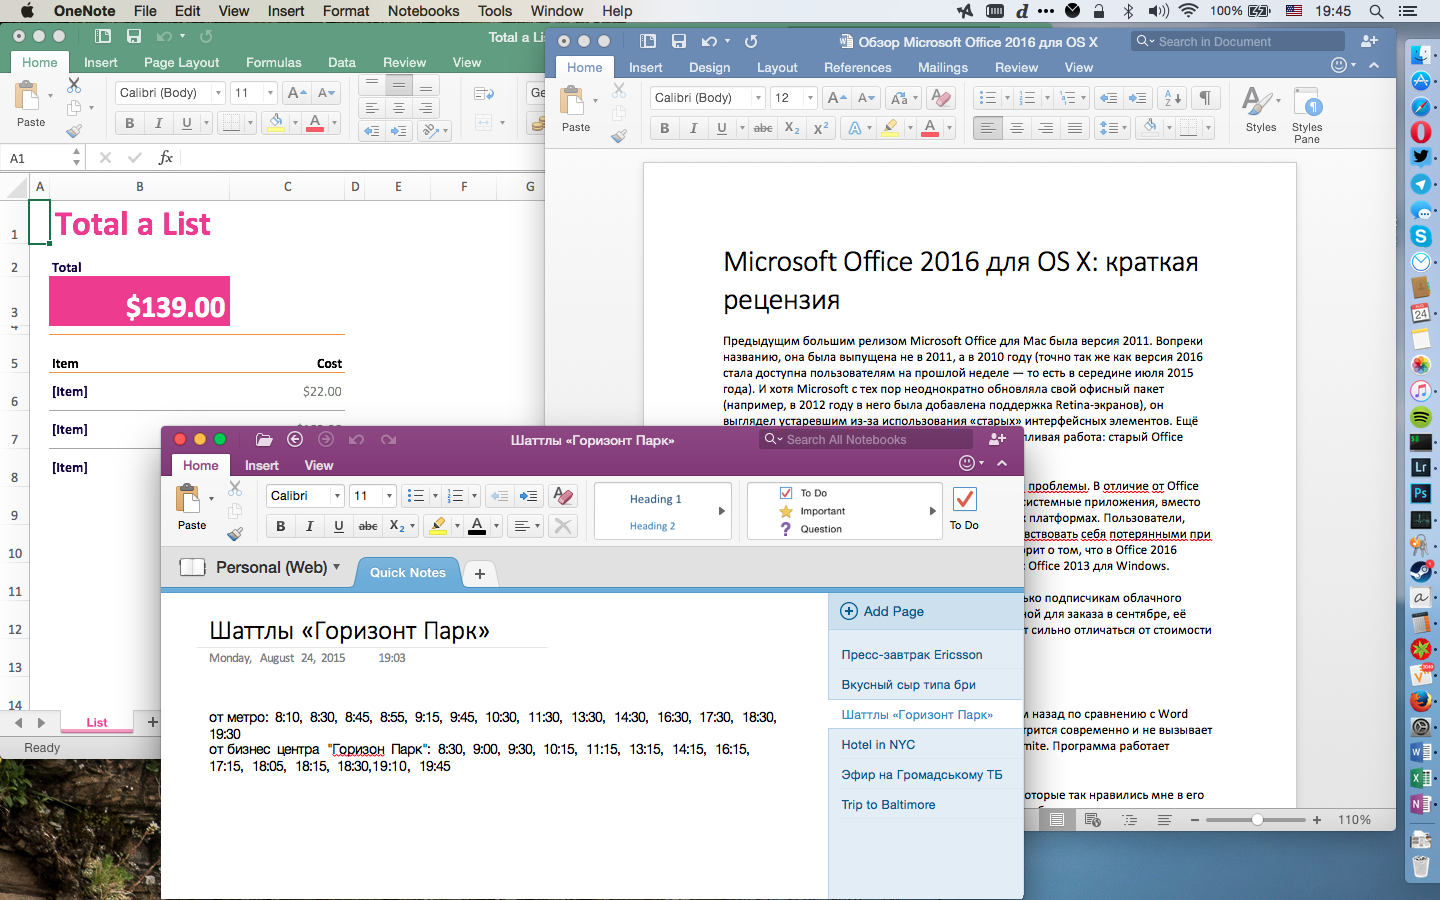 Microsoft Office 2016 для OS X: краткая рецензия